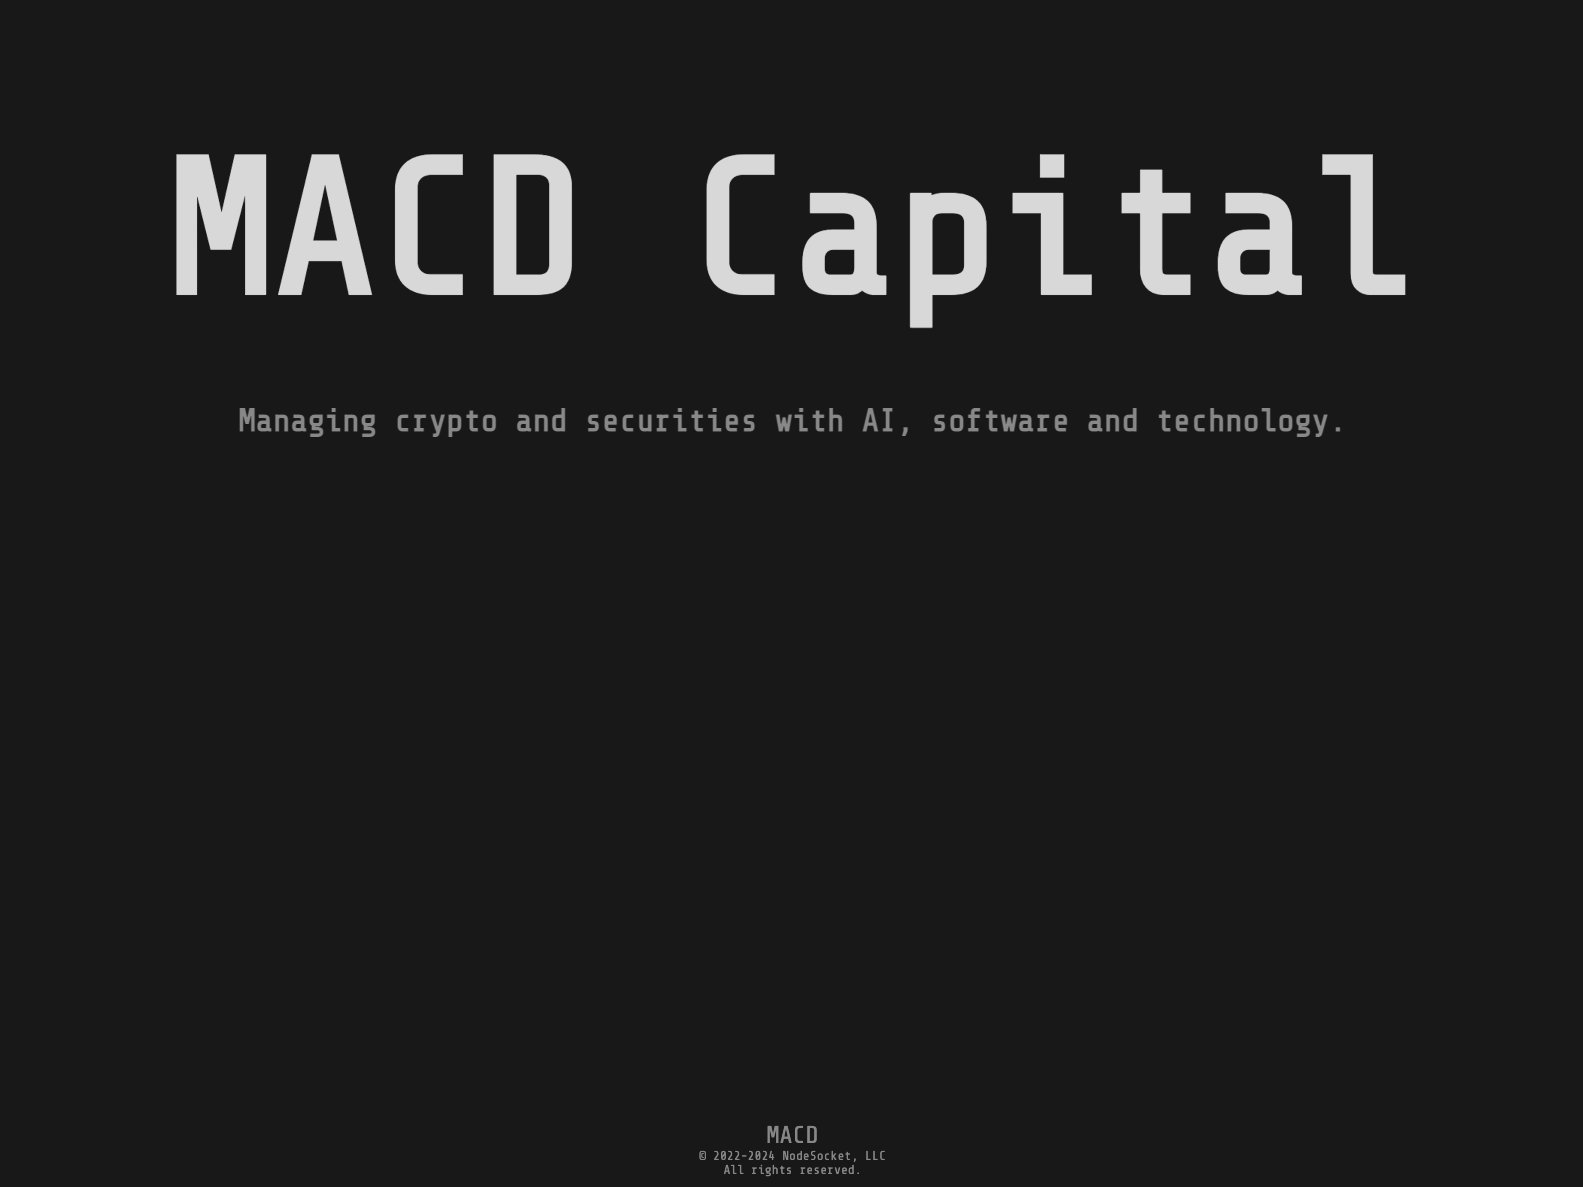 MACD Capital